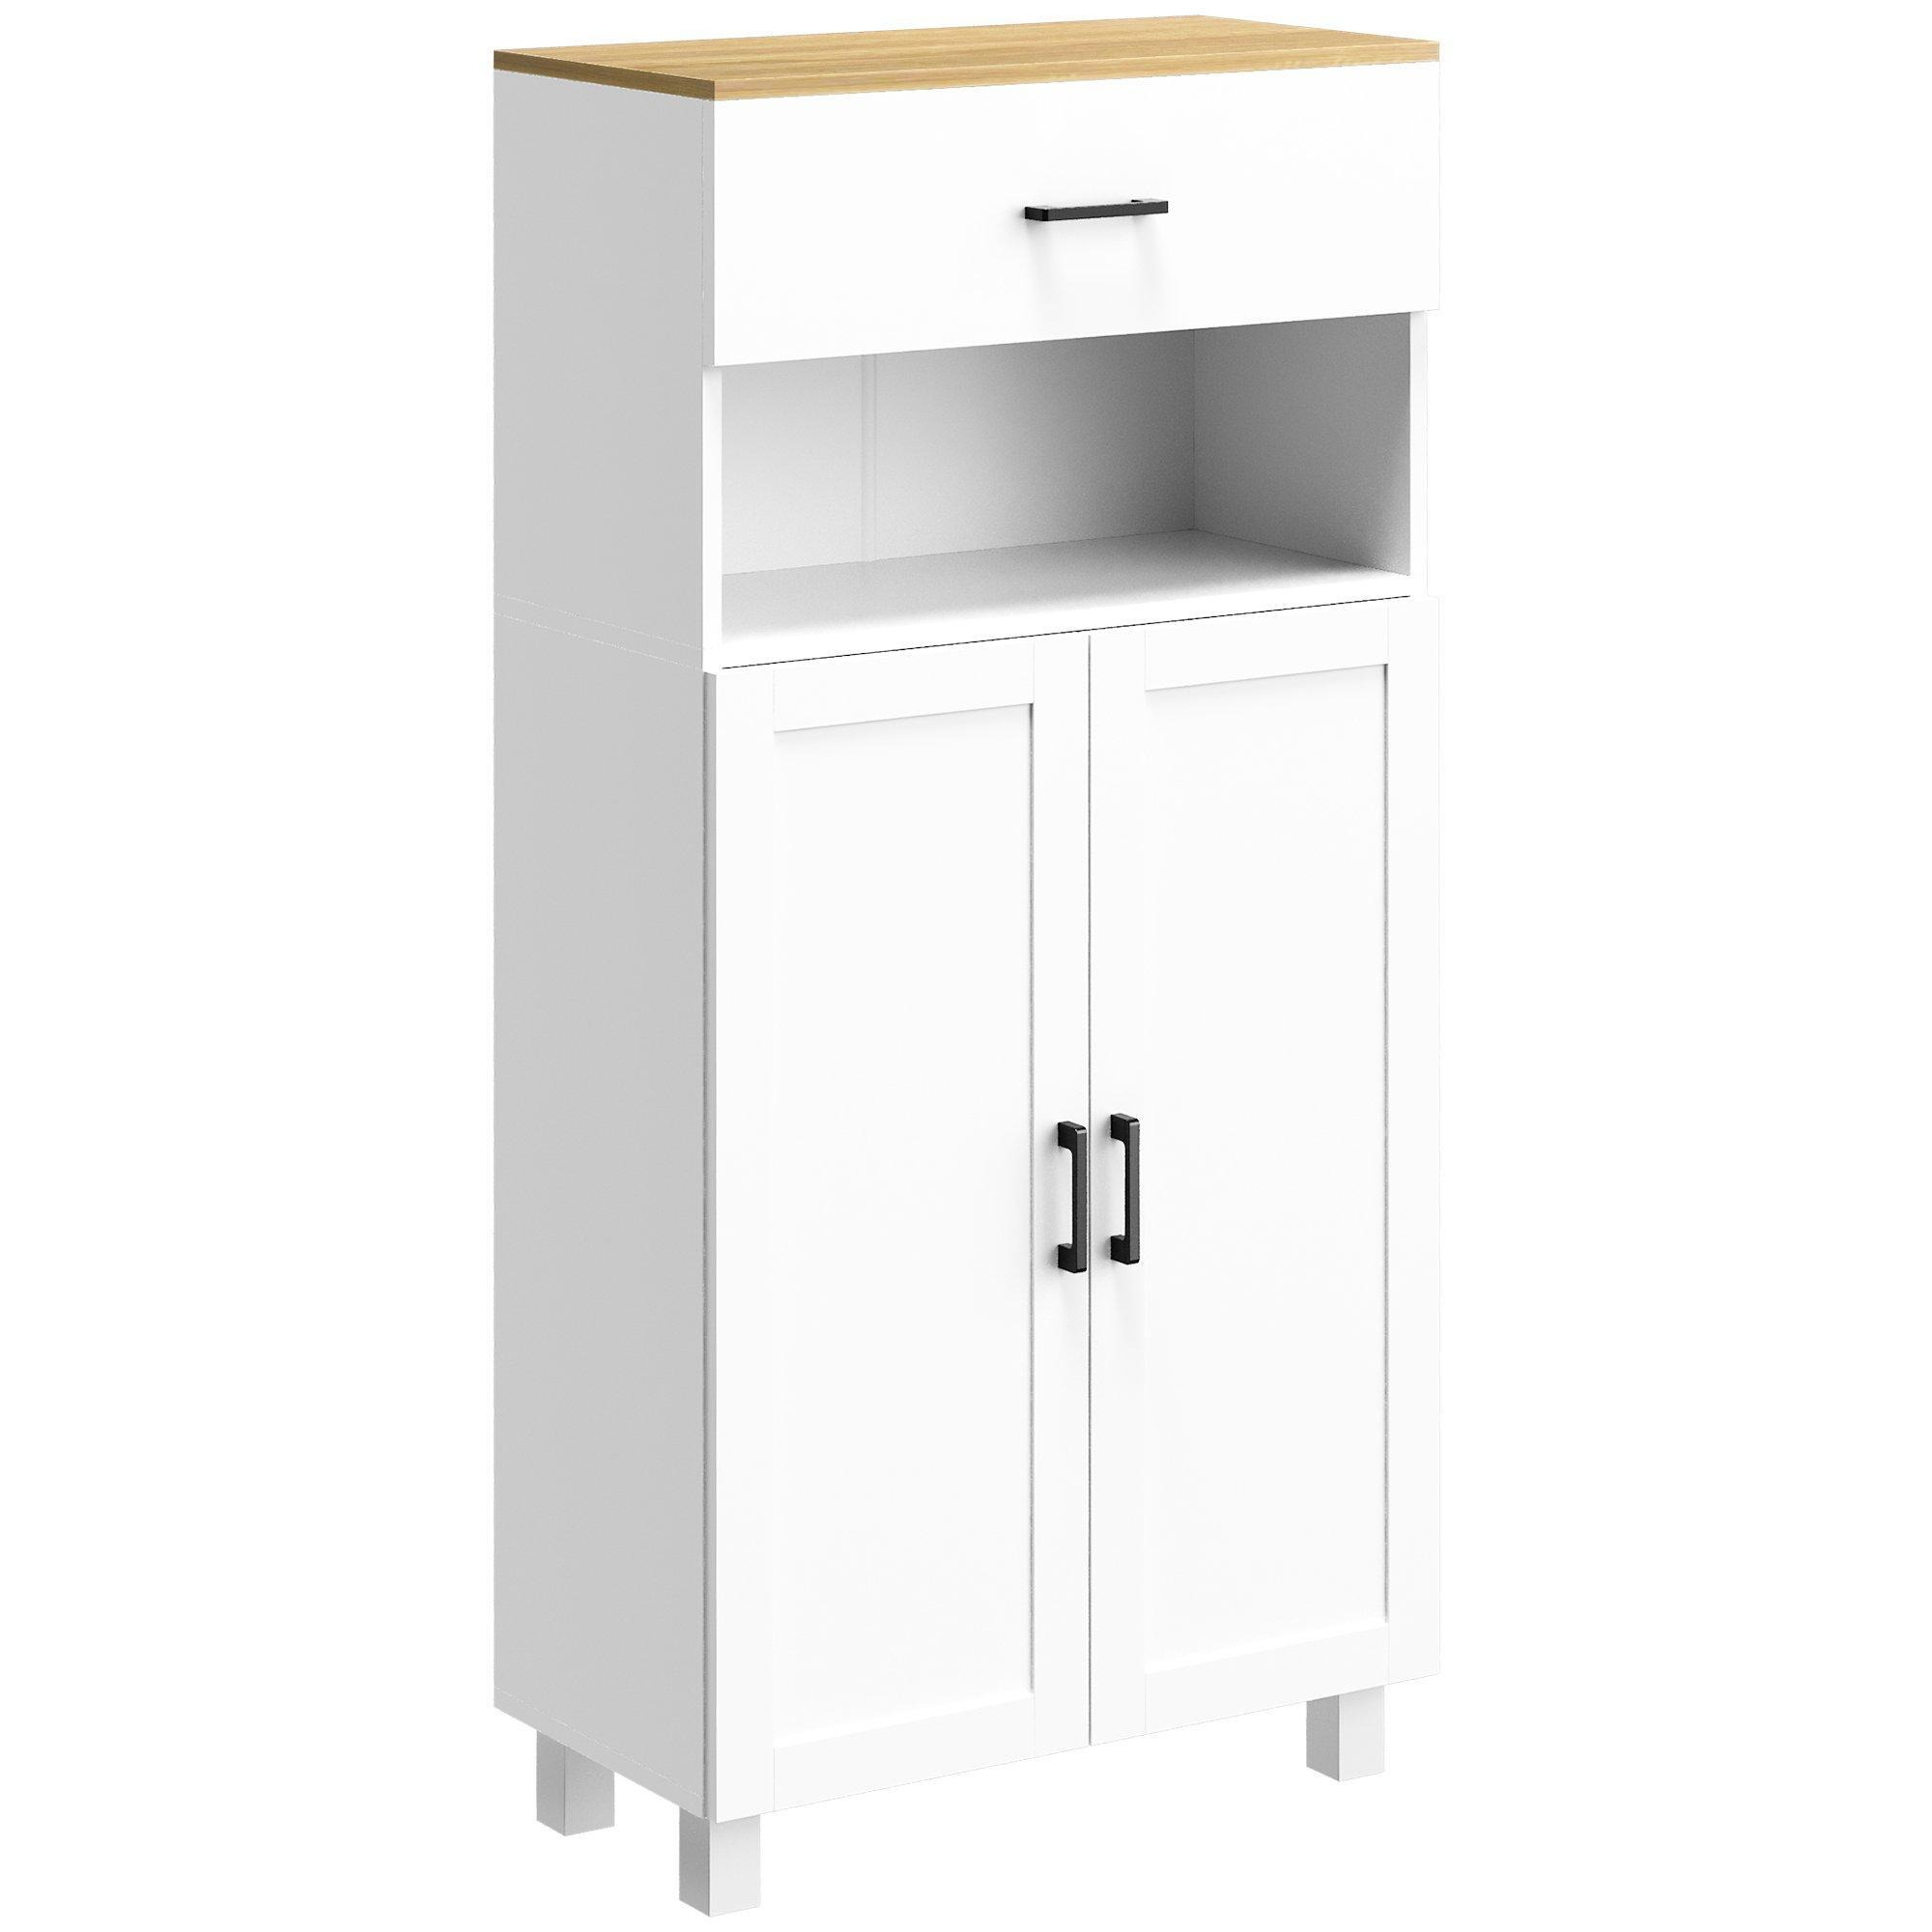 Freestanding Kitchen Storage Cabinet with Cupboard, Drawer - image 1